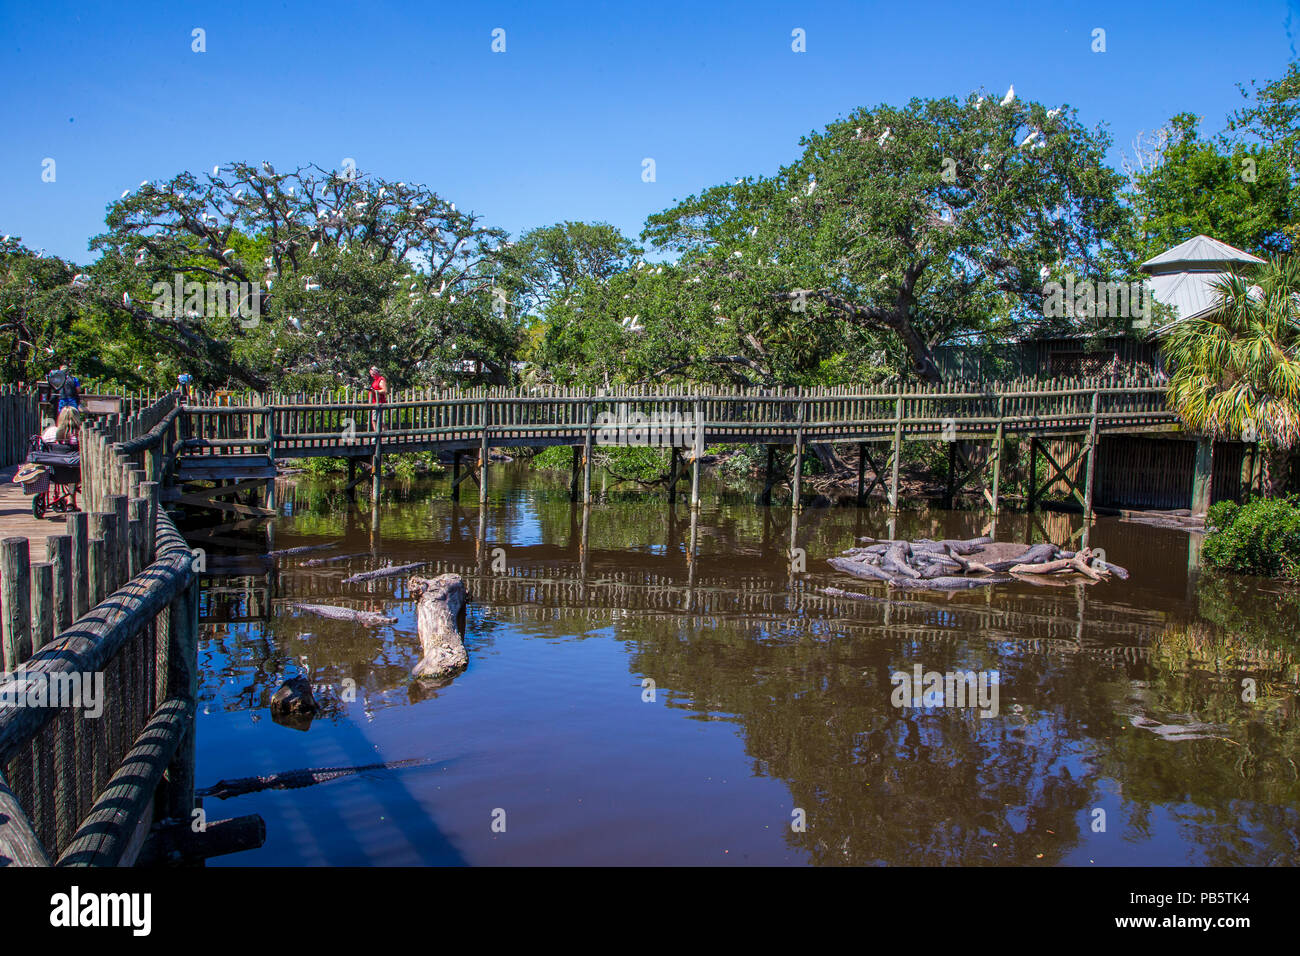 Boardwalk in Native swamp & bird rookery in St. Augustine Alligator Farm Zoological Park in St Augustine Florida Stock Photo